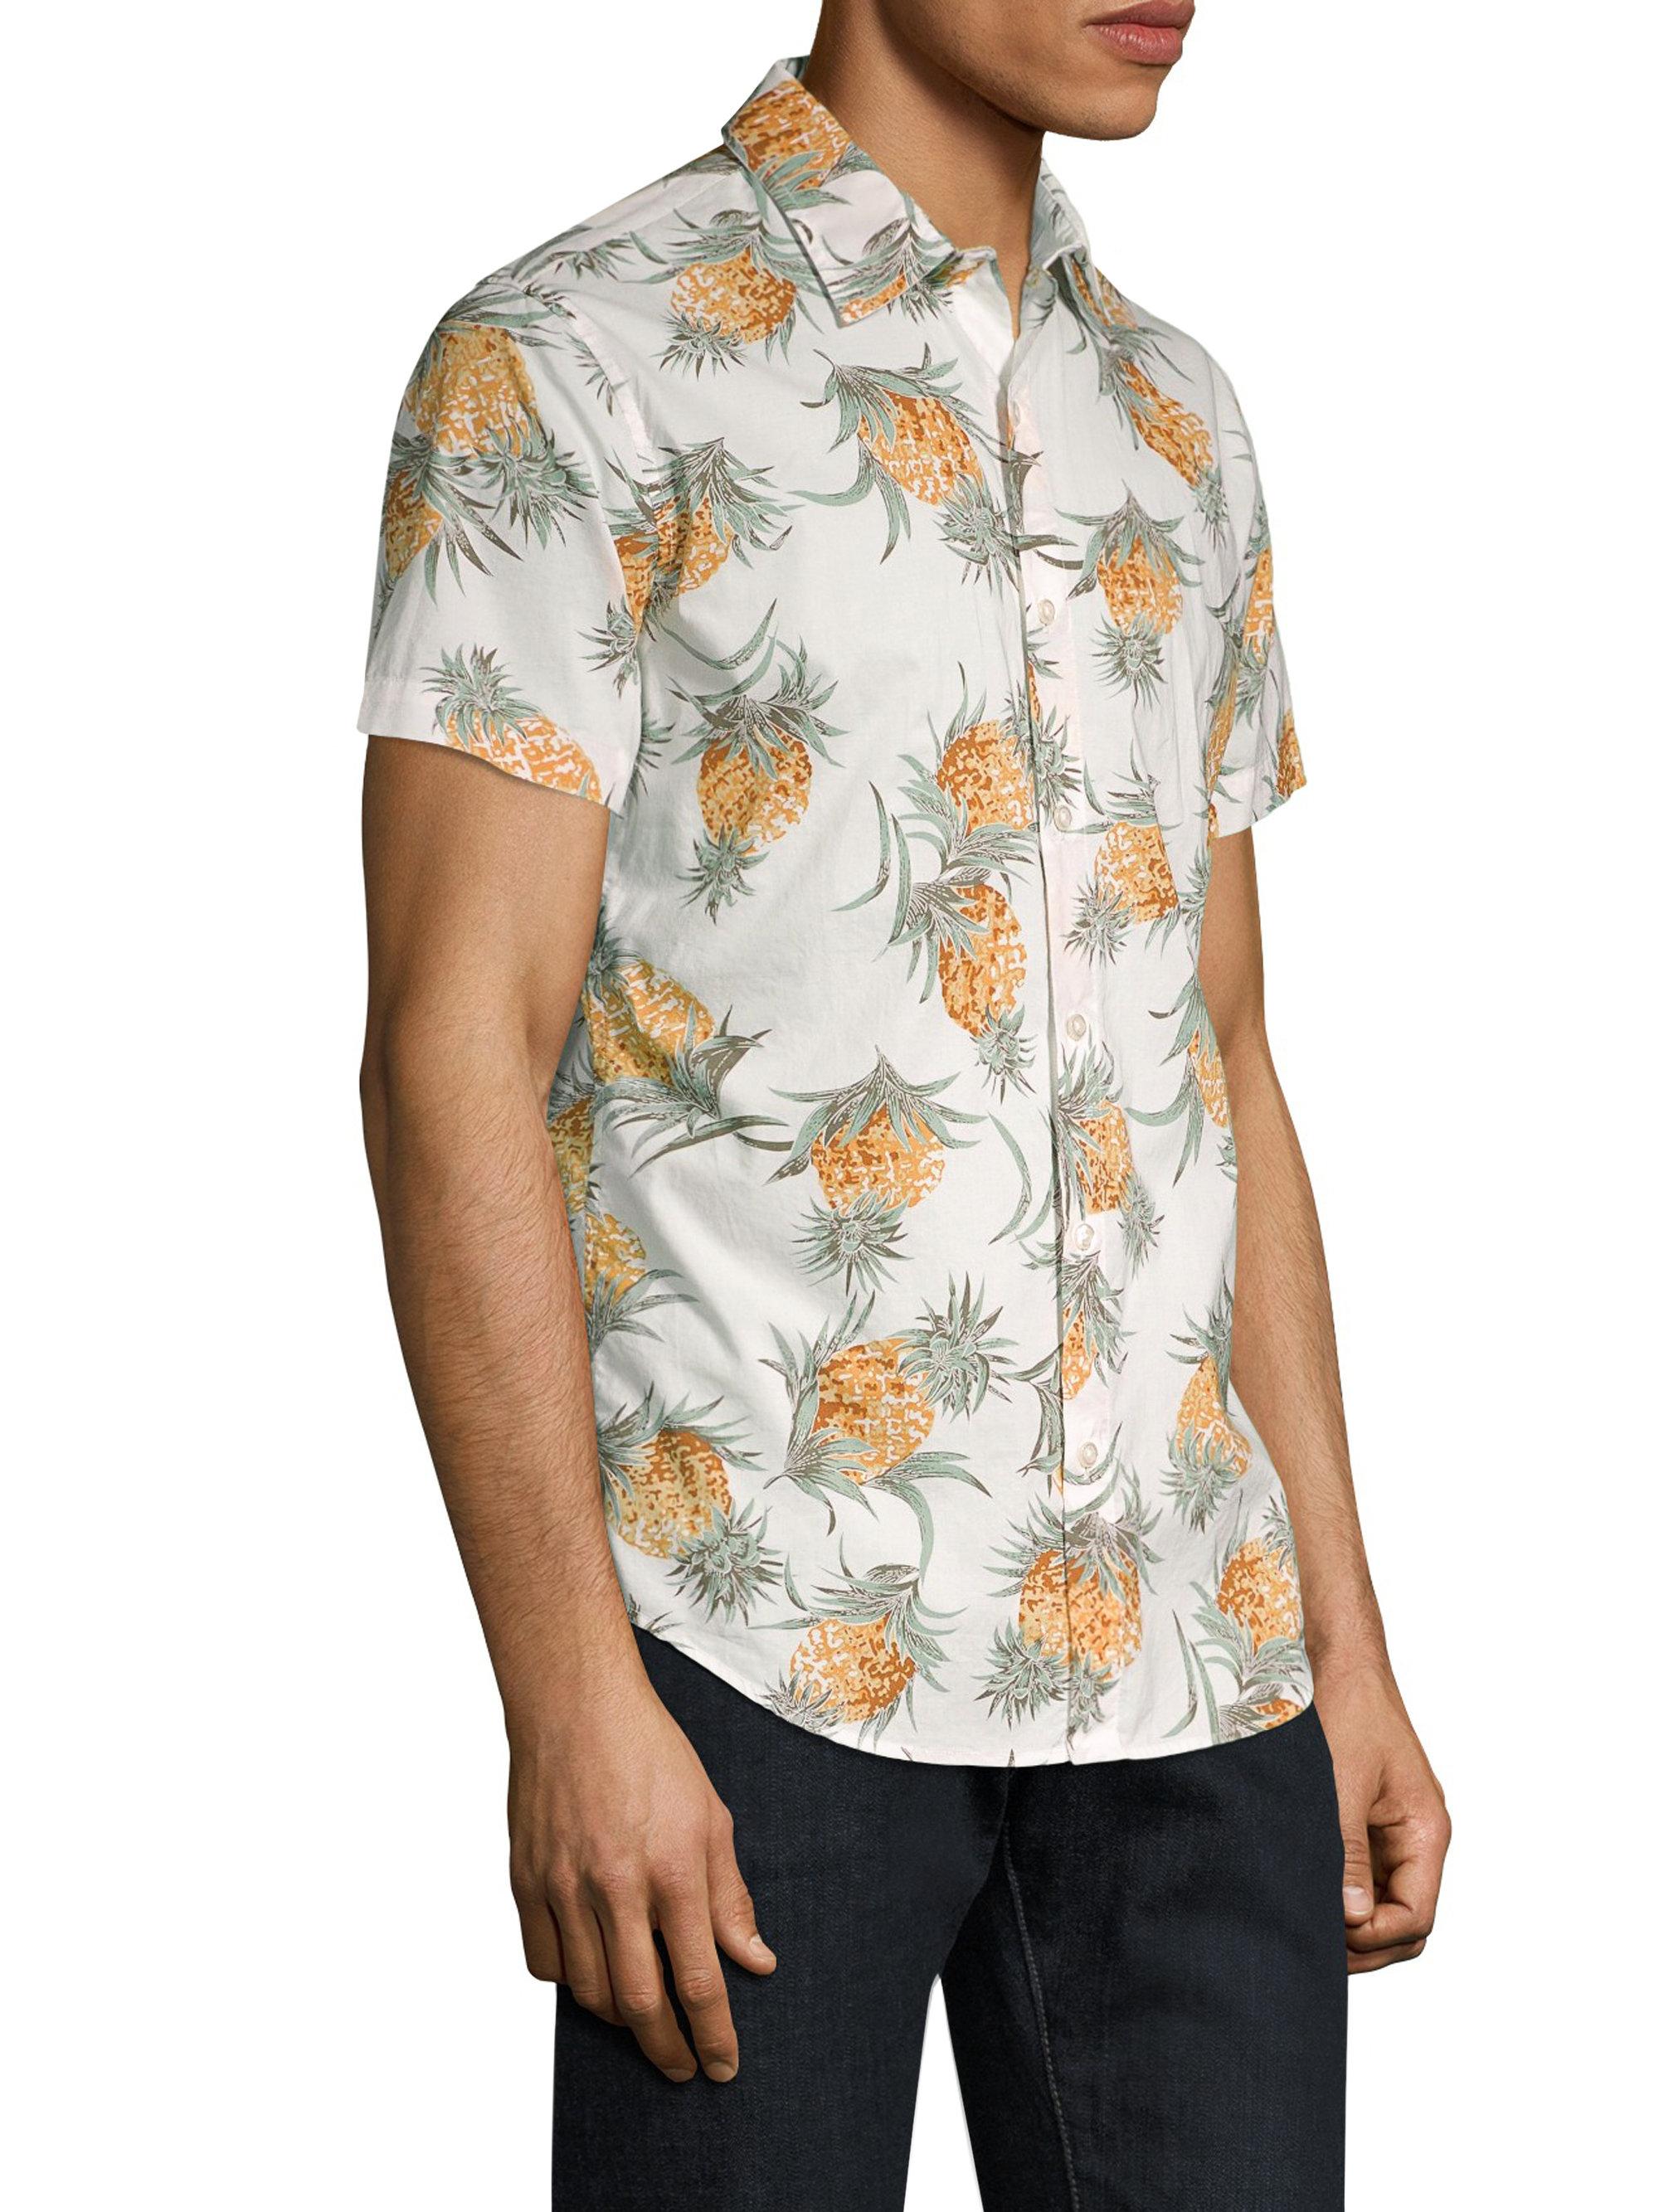 bonobos pineapple shirt